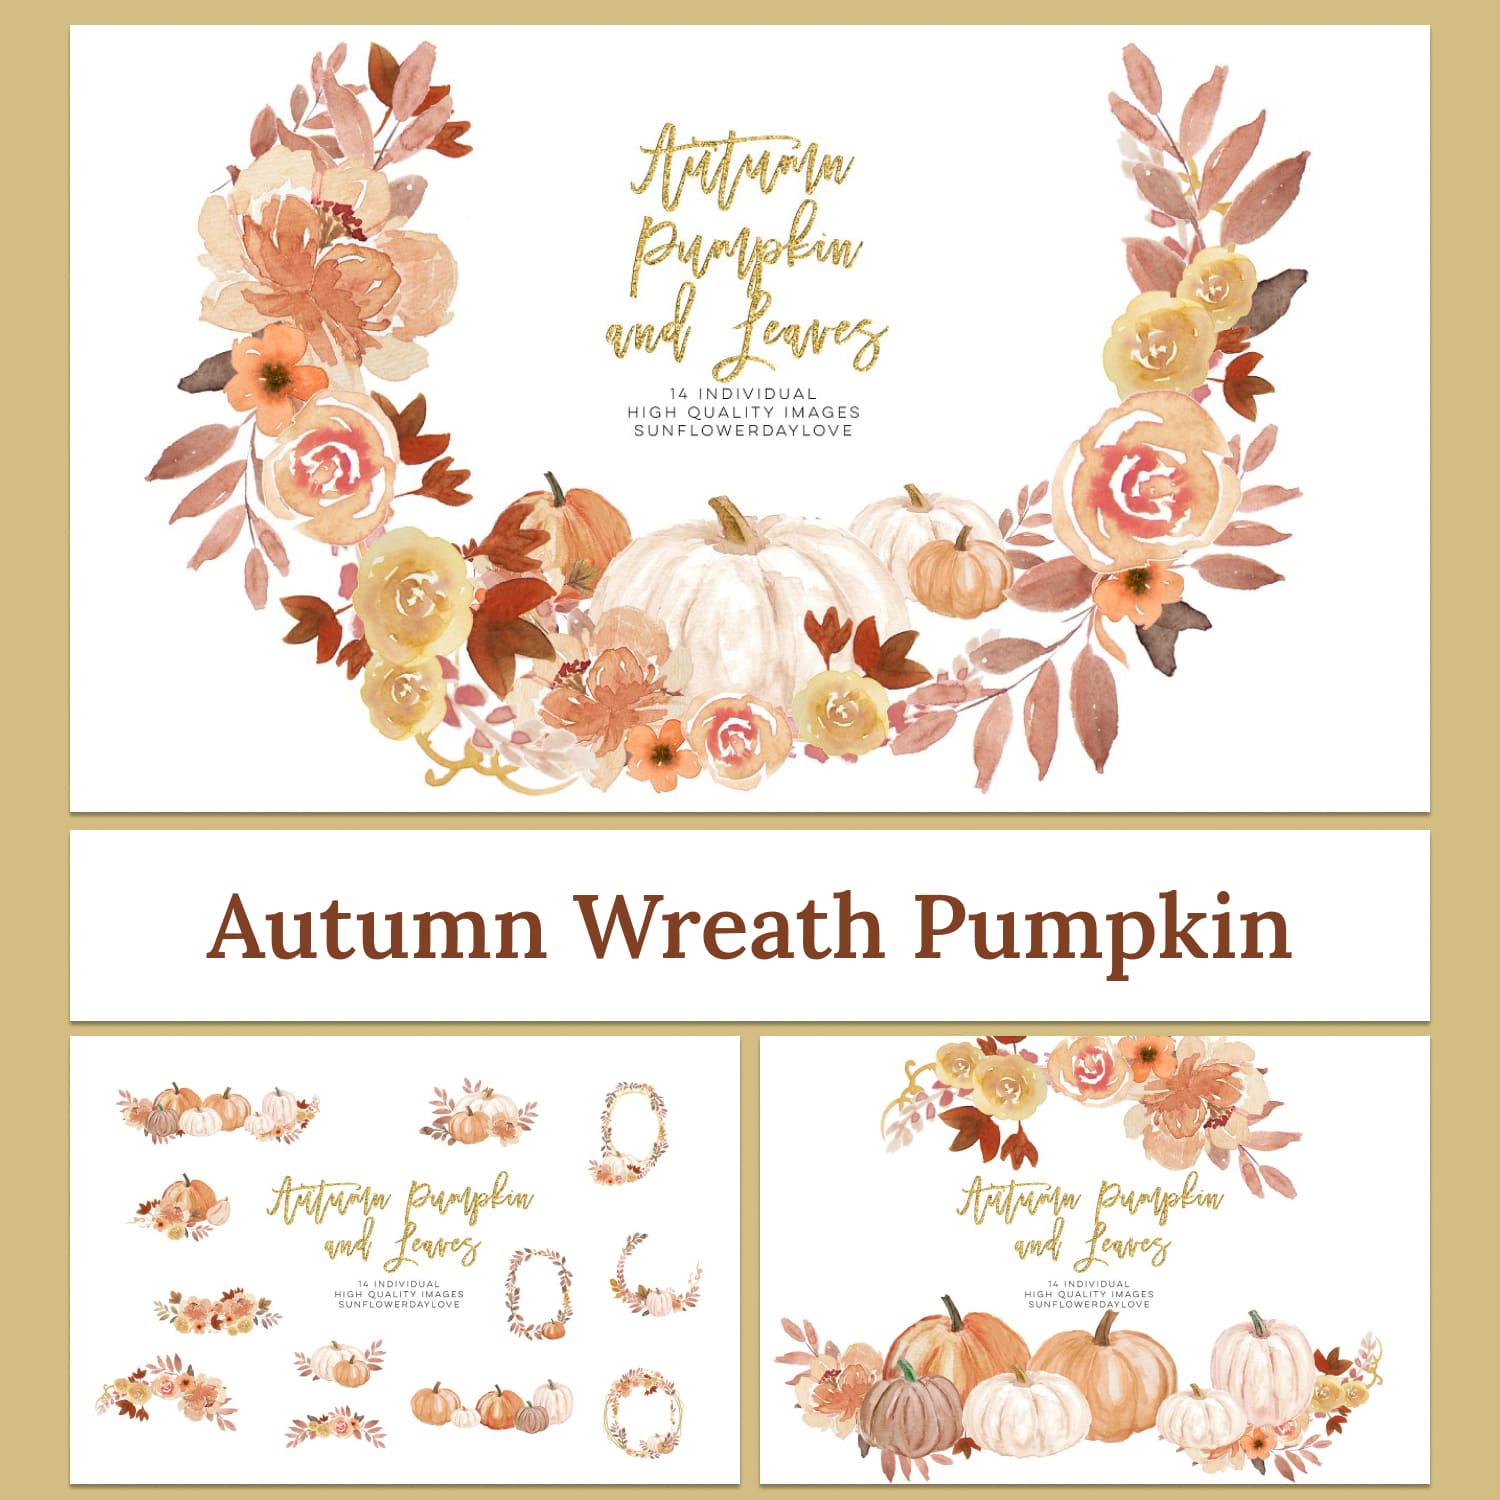 Autumn Wreath Pumpkin Clipart Collection cover image.